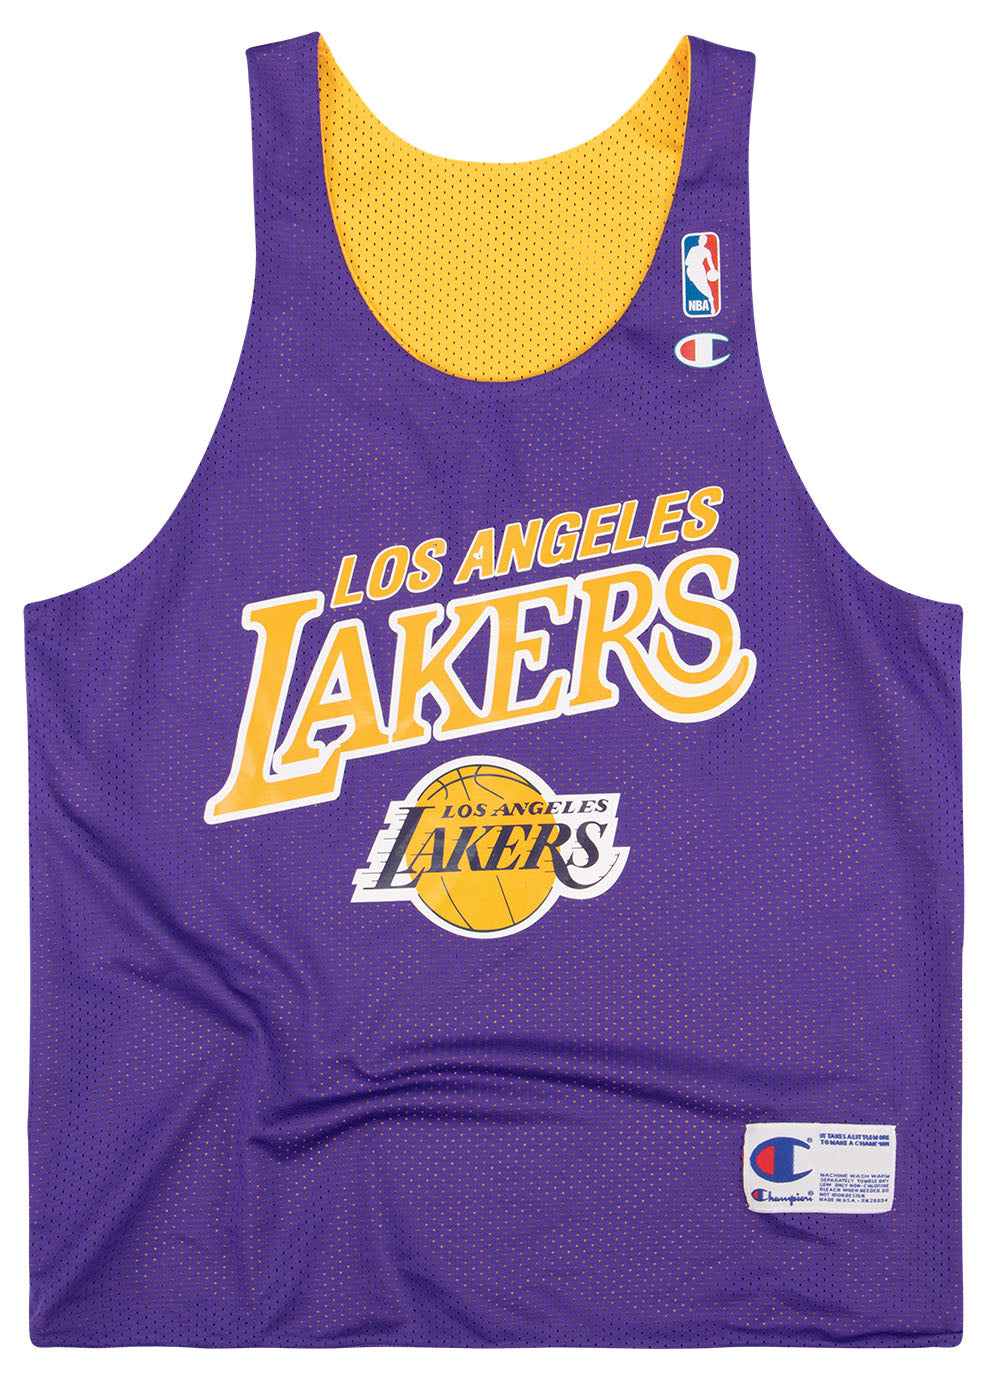 Vintage Champion NBA Los Angeles Lakers Jacket 1990-2000s Size Large